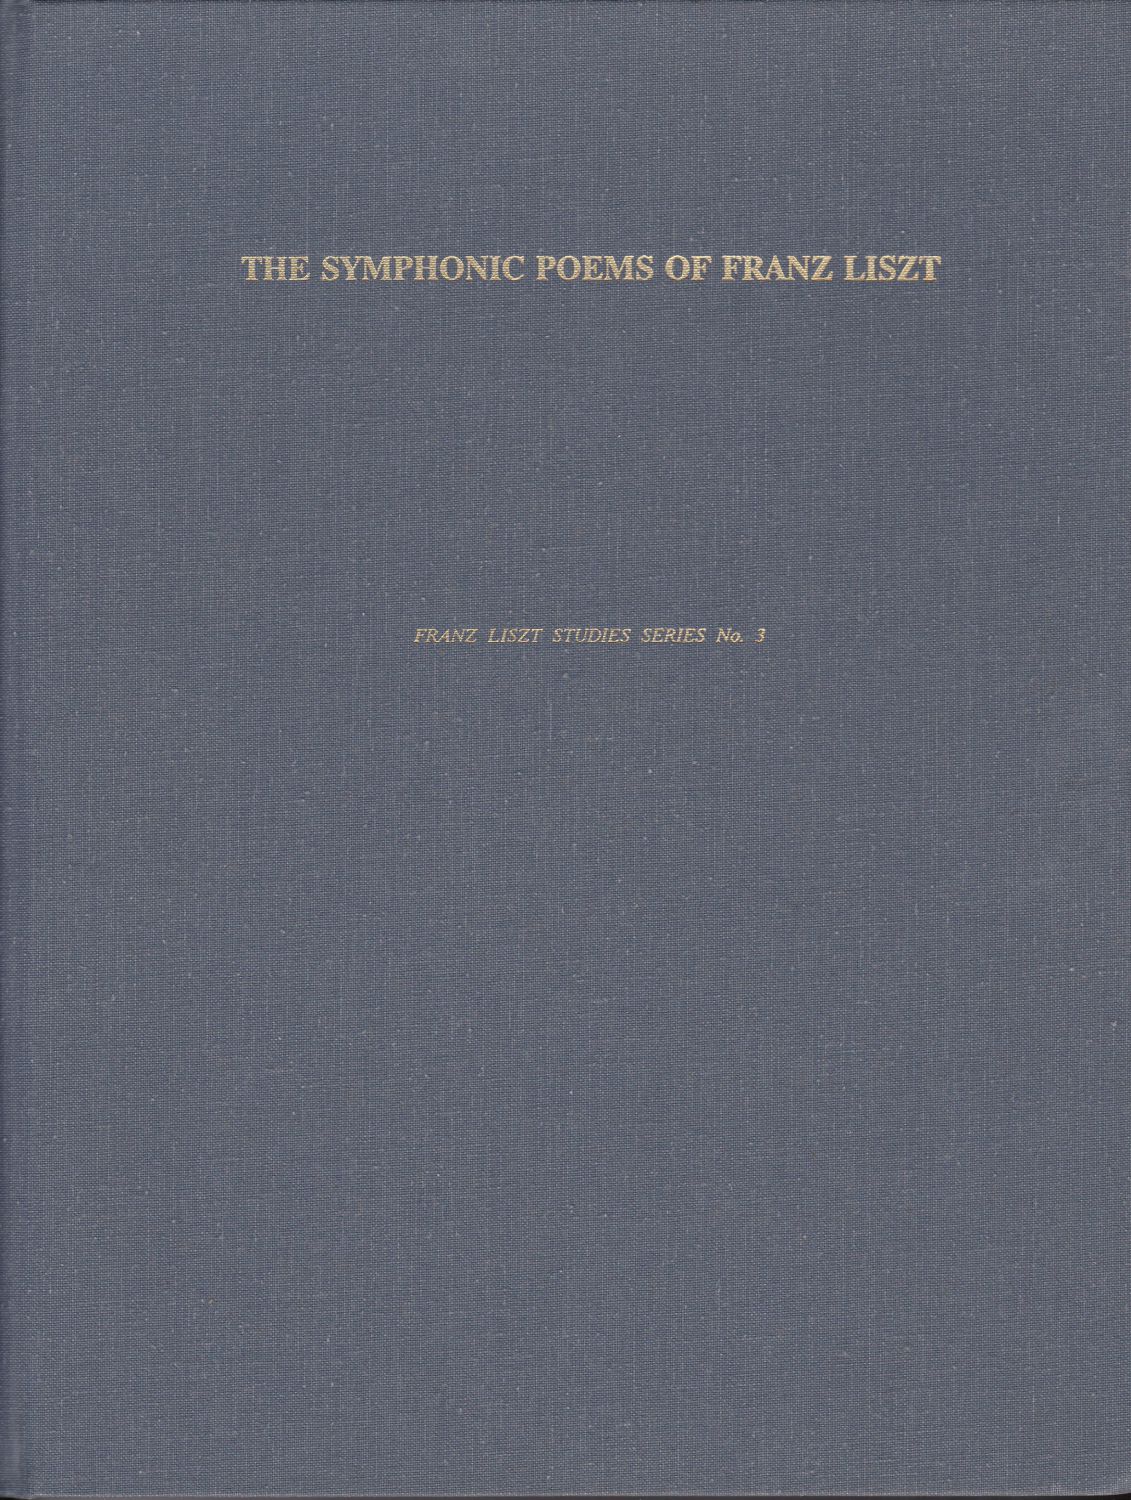 The symphonic poems of Franz Liszt.